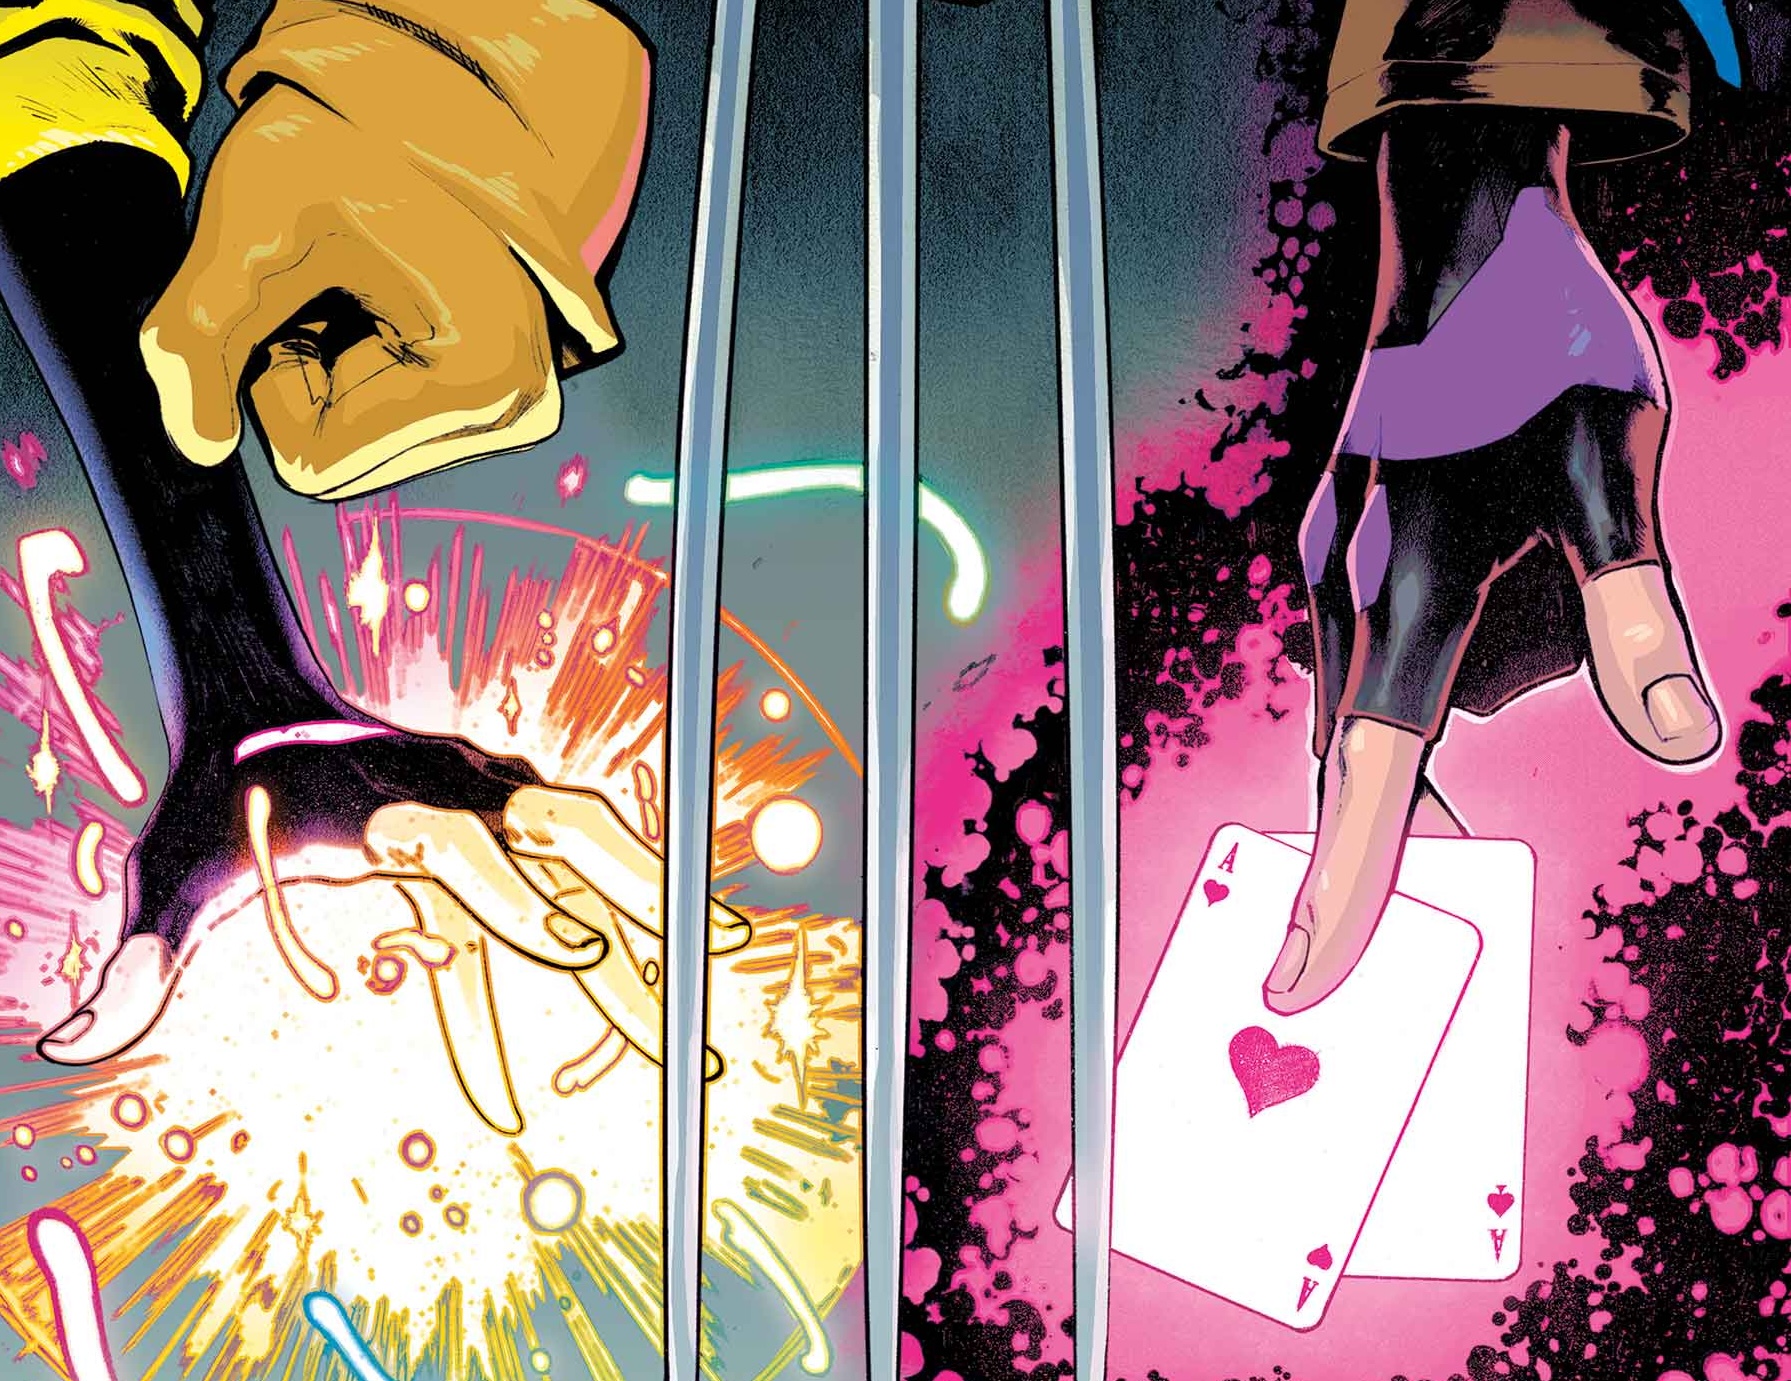 Marvel first look: Uncanny X-Men #1